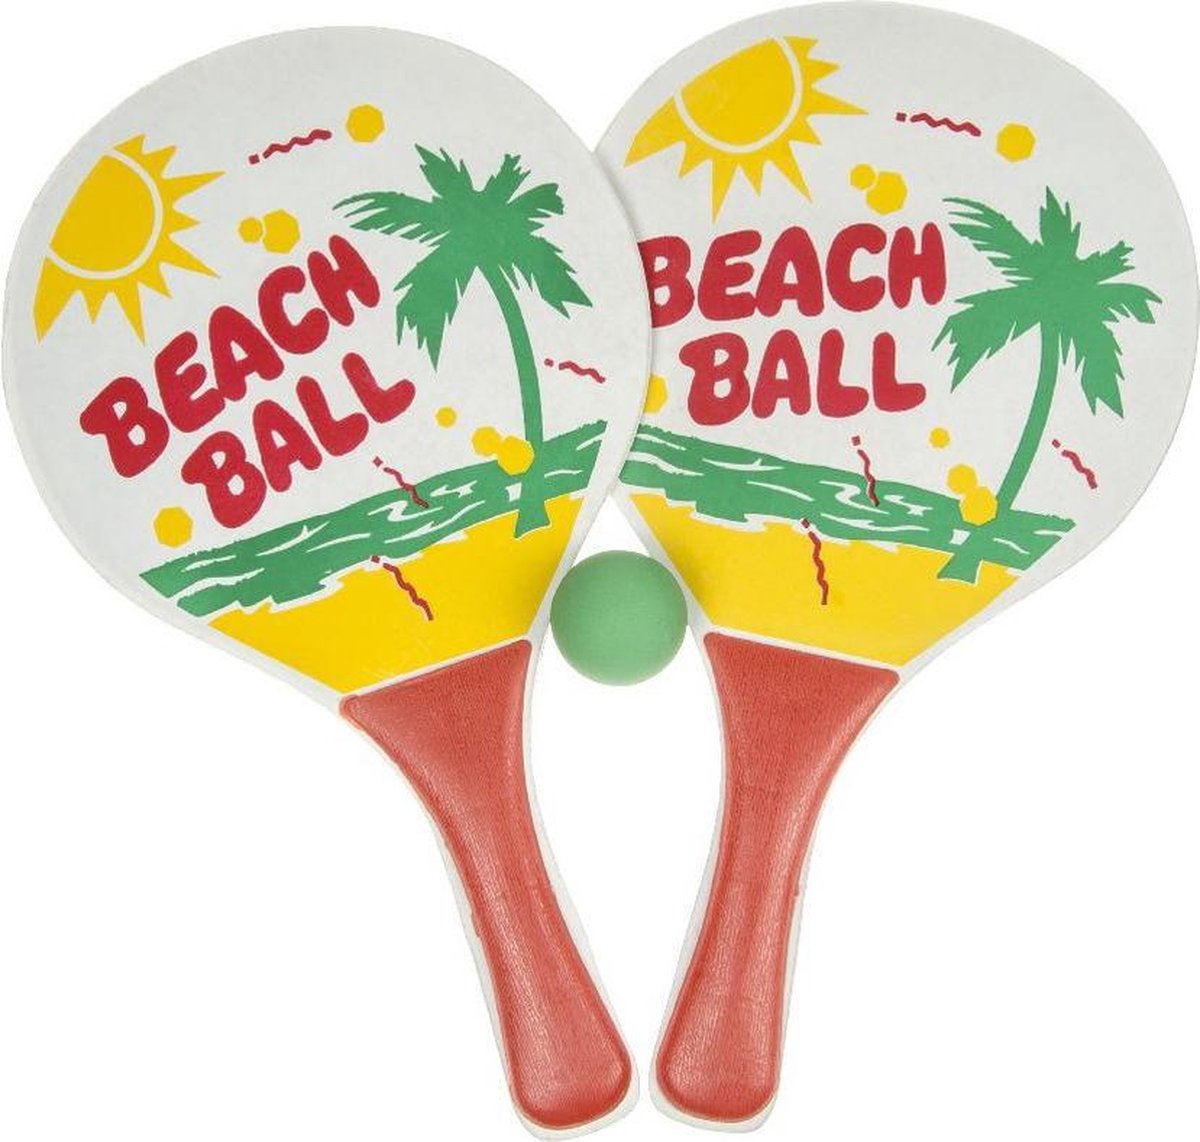 Houten beachball set oranje - Strand balletjes - Rackets/batjes en bal - Tennis ballenspel - LG-Imports